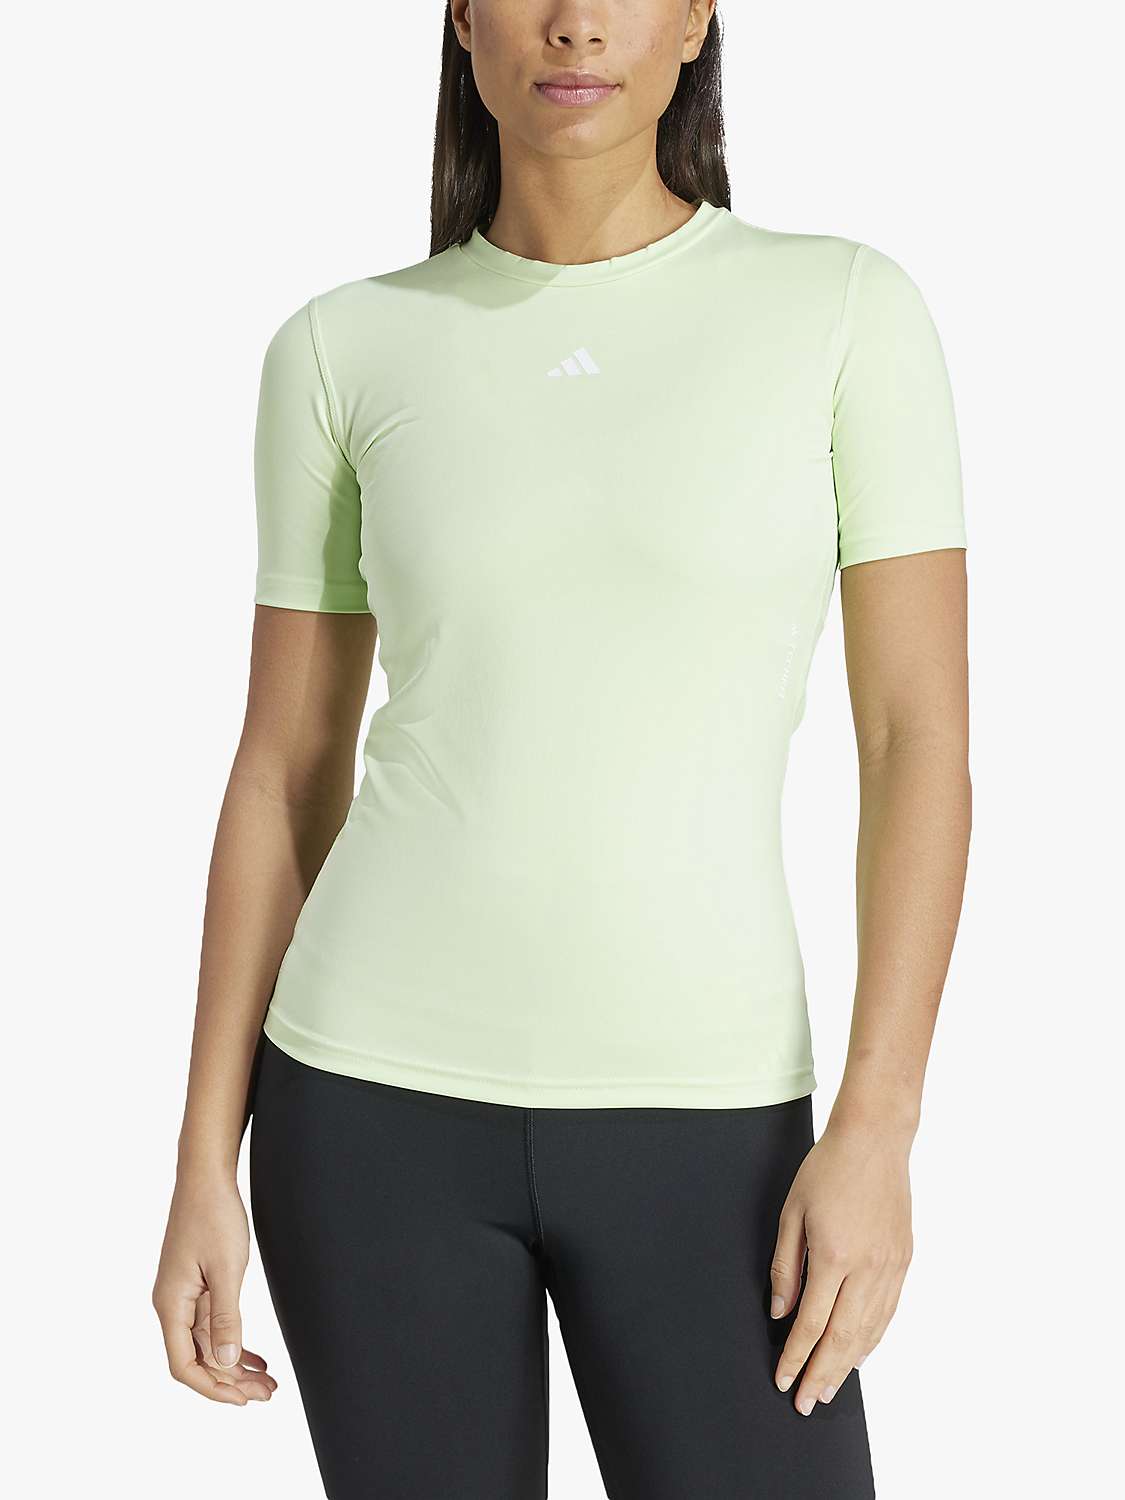 Buy adidas Women's TechFit Short Sleeve Training T-Shirt, Green Spark/White Online at johnlewis.com